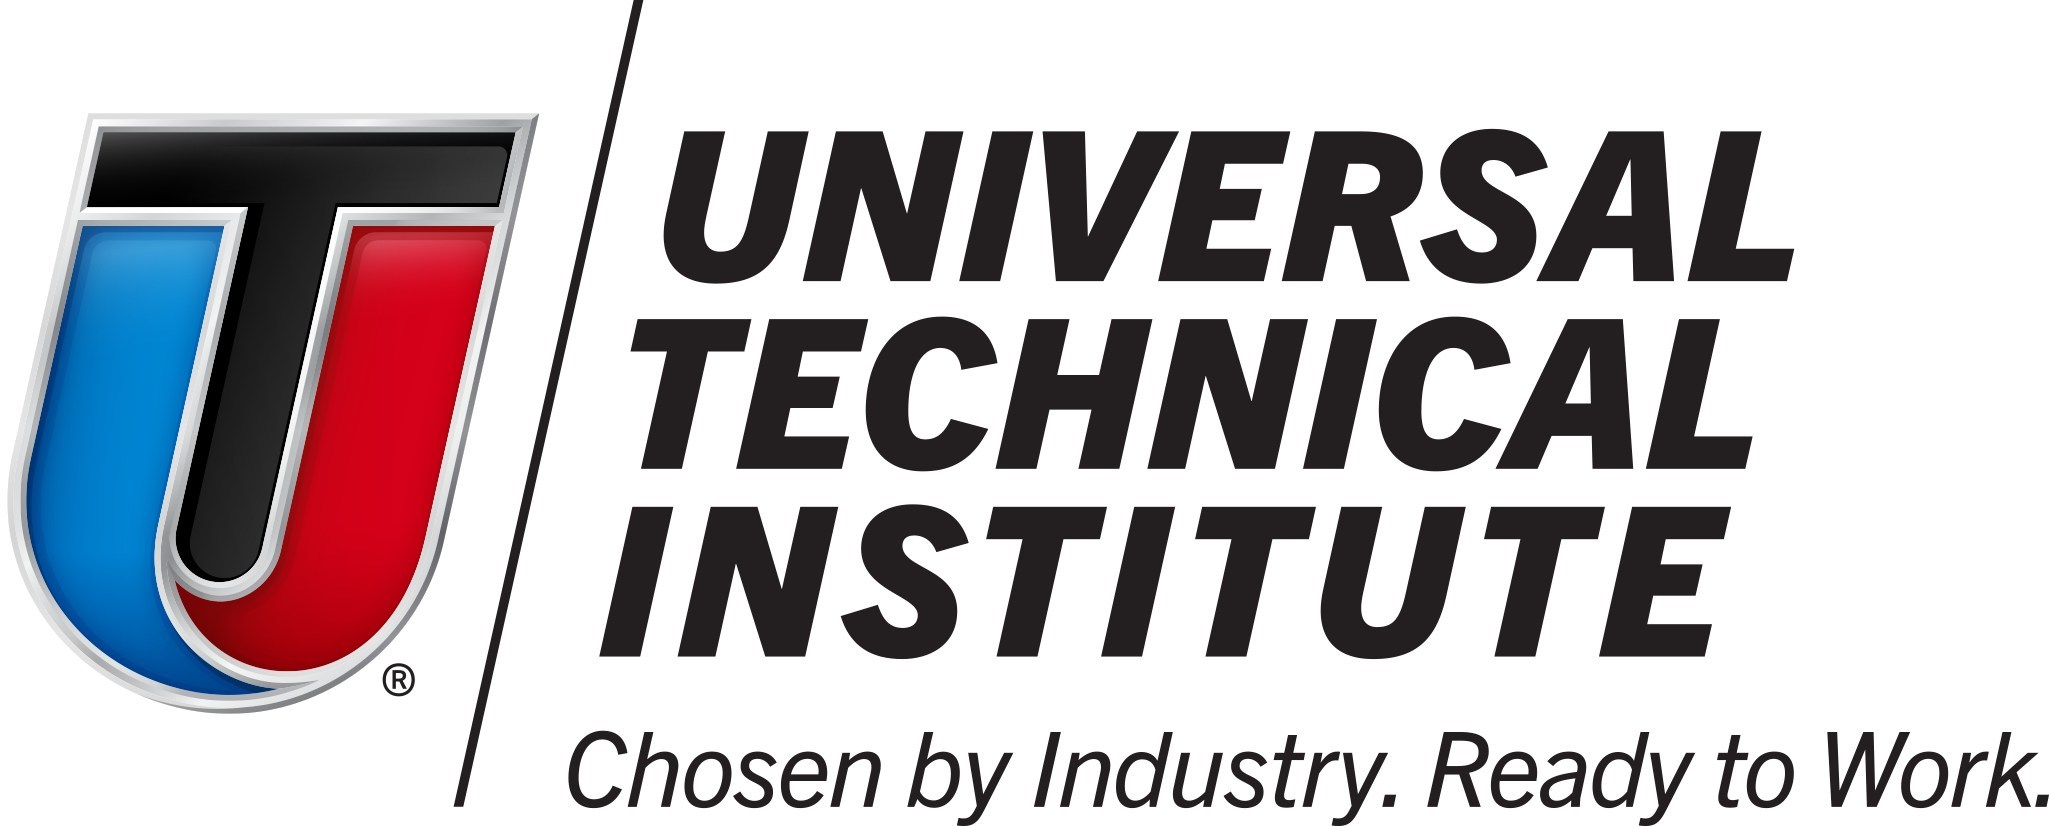 Universal Technical Institute "Ignite" Free High School Summer Program